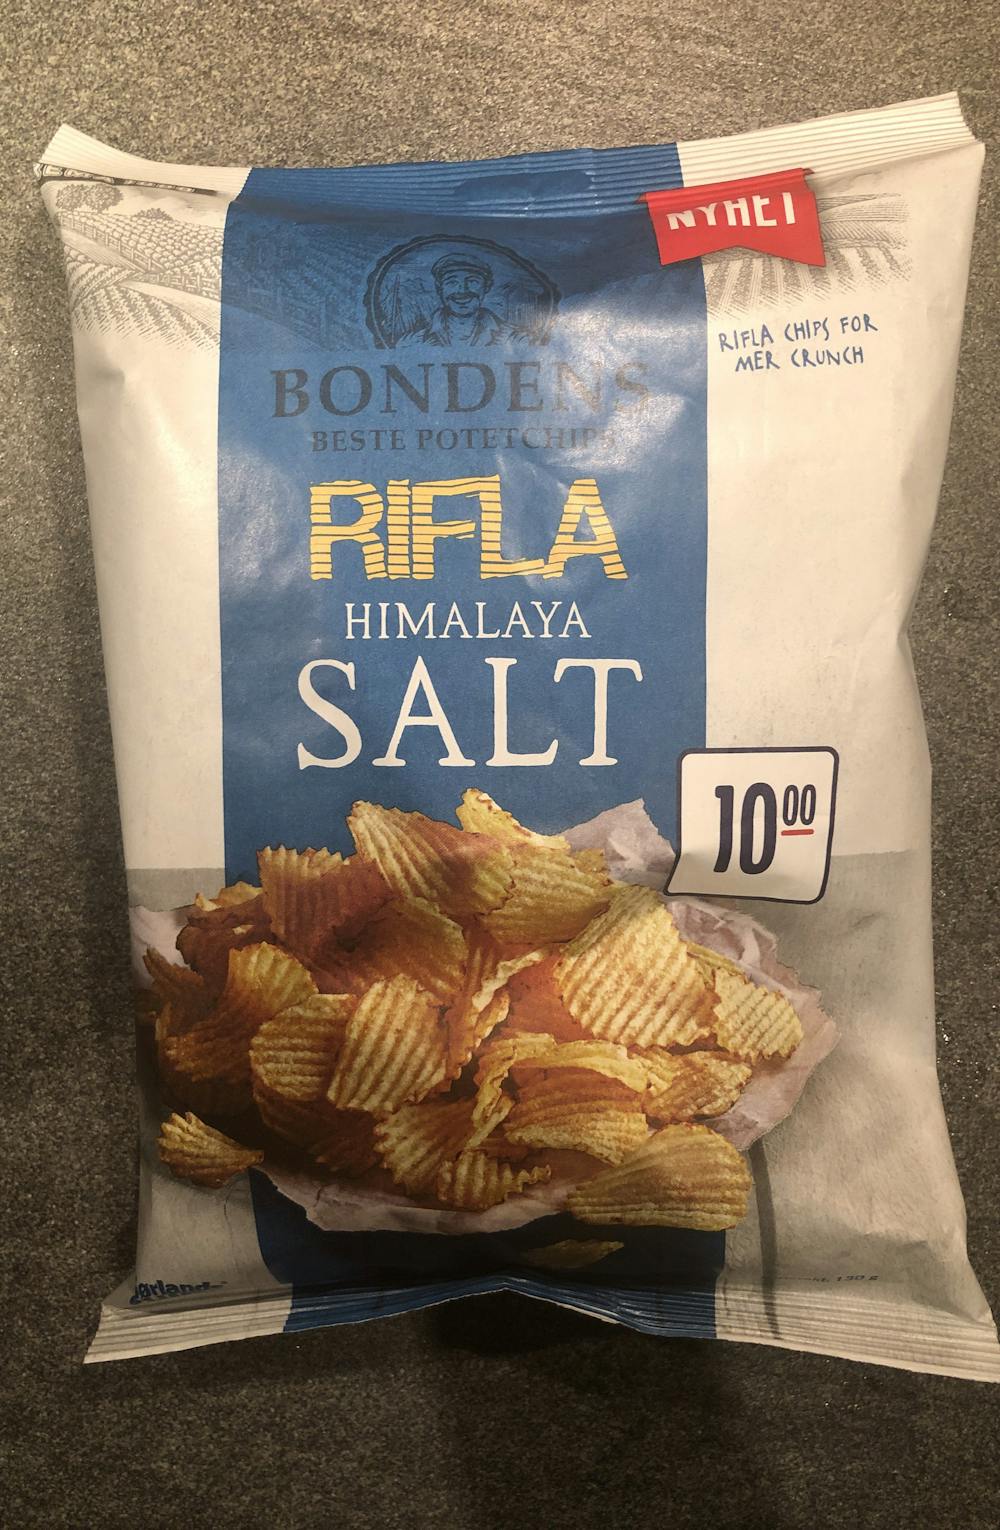 Rifla himalaya salt, Bondens beste potetchips